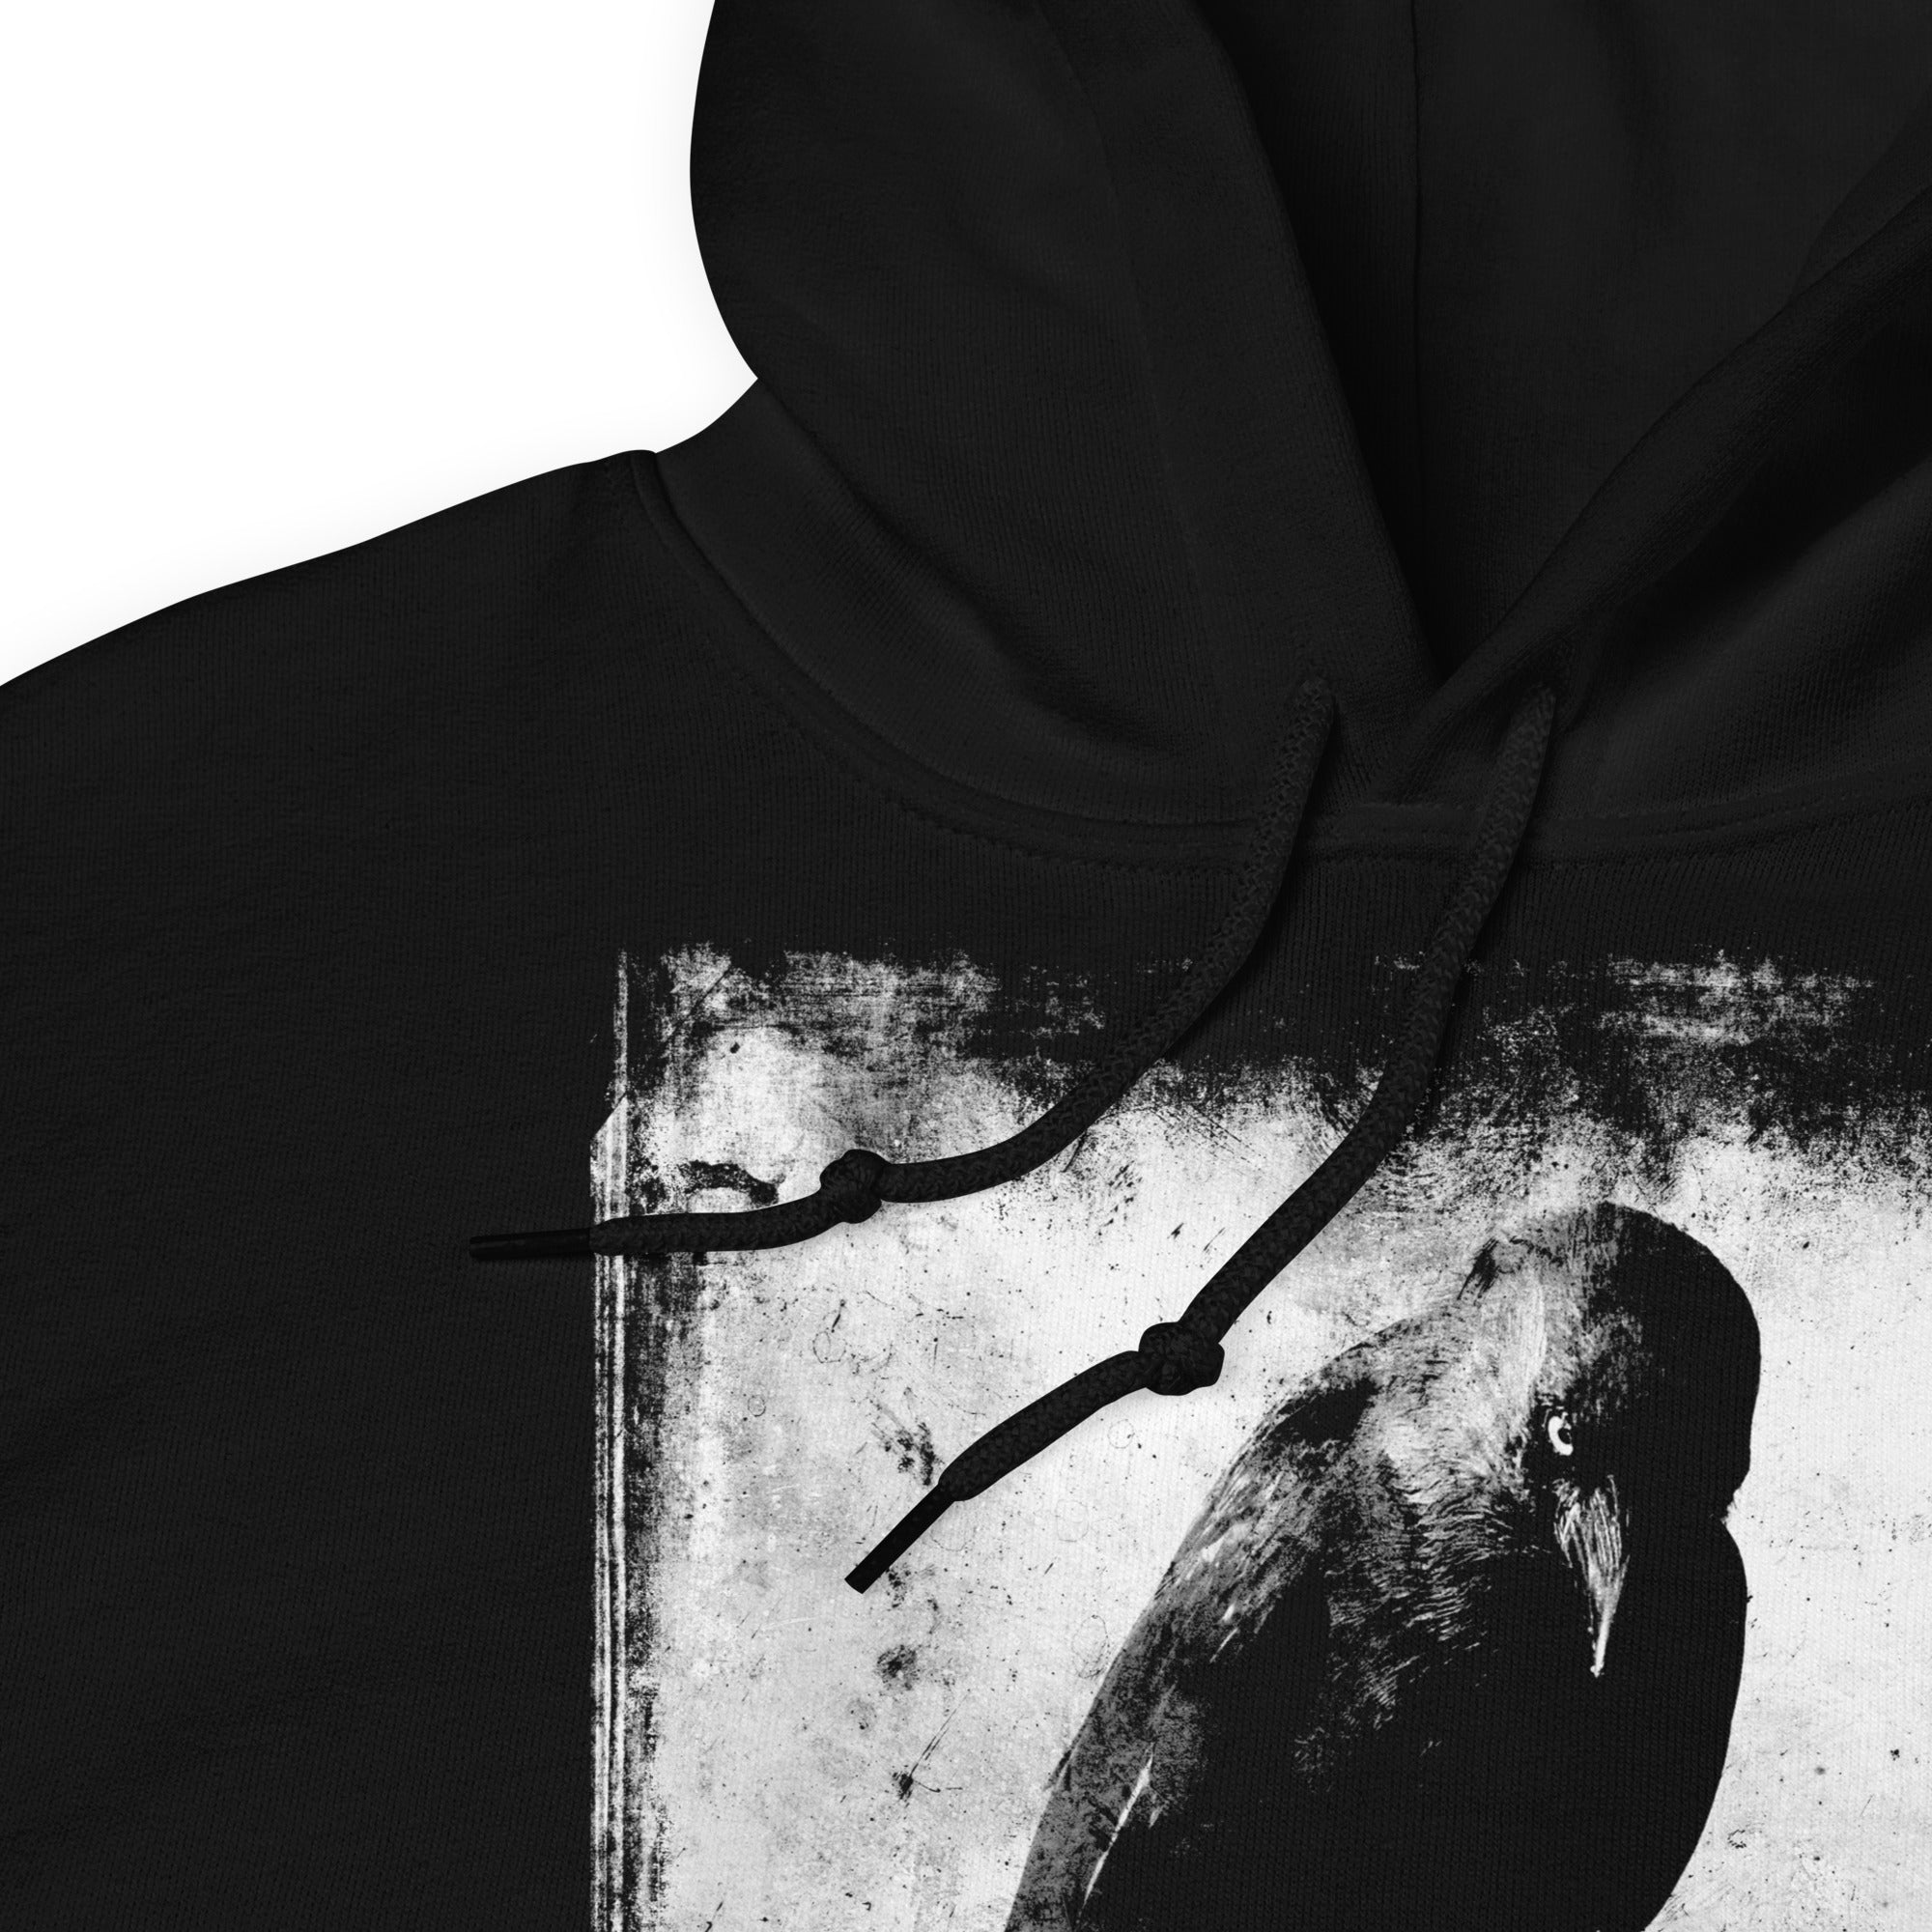 Evil Eye Death Stare Raven Blackbird Unisex Hoodie Sweatshirt - Edge of Life Designs